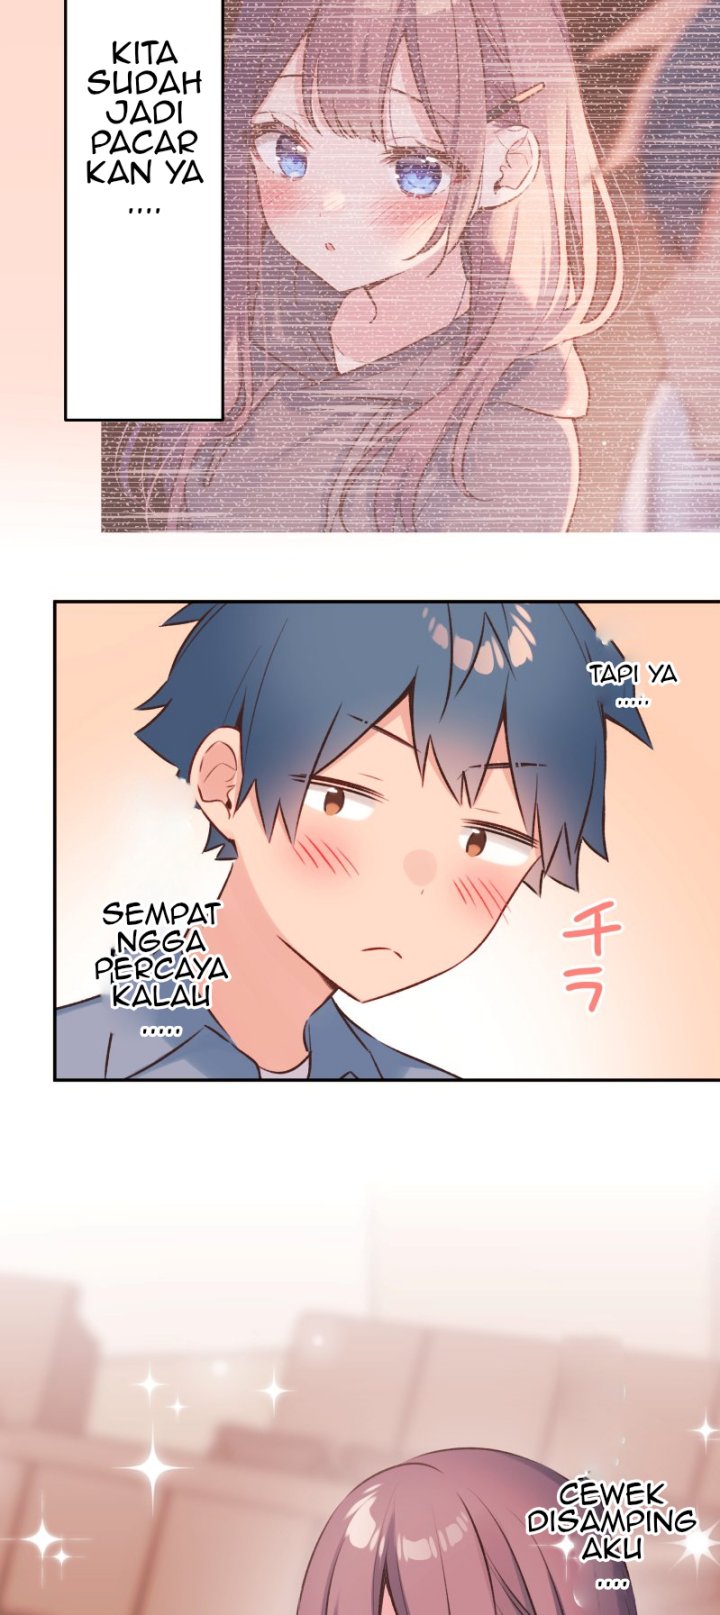 Waka-chan Is Flirty Again Chapter 90